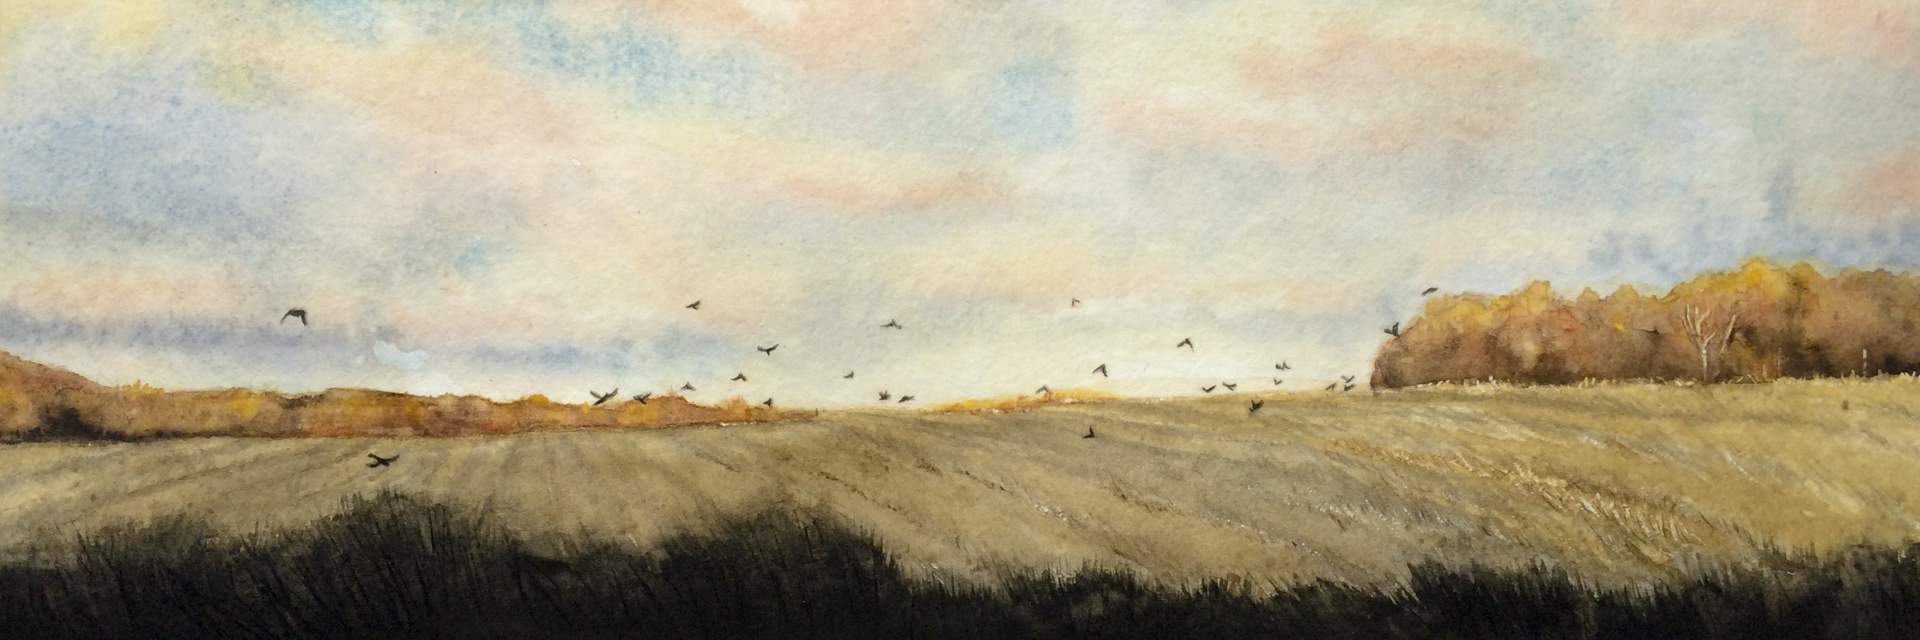 Crows in a Field